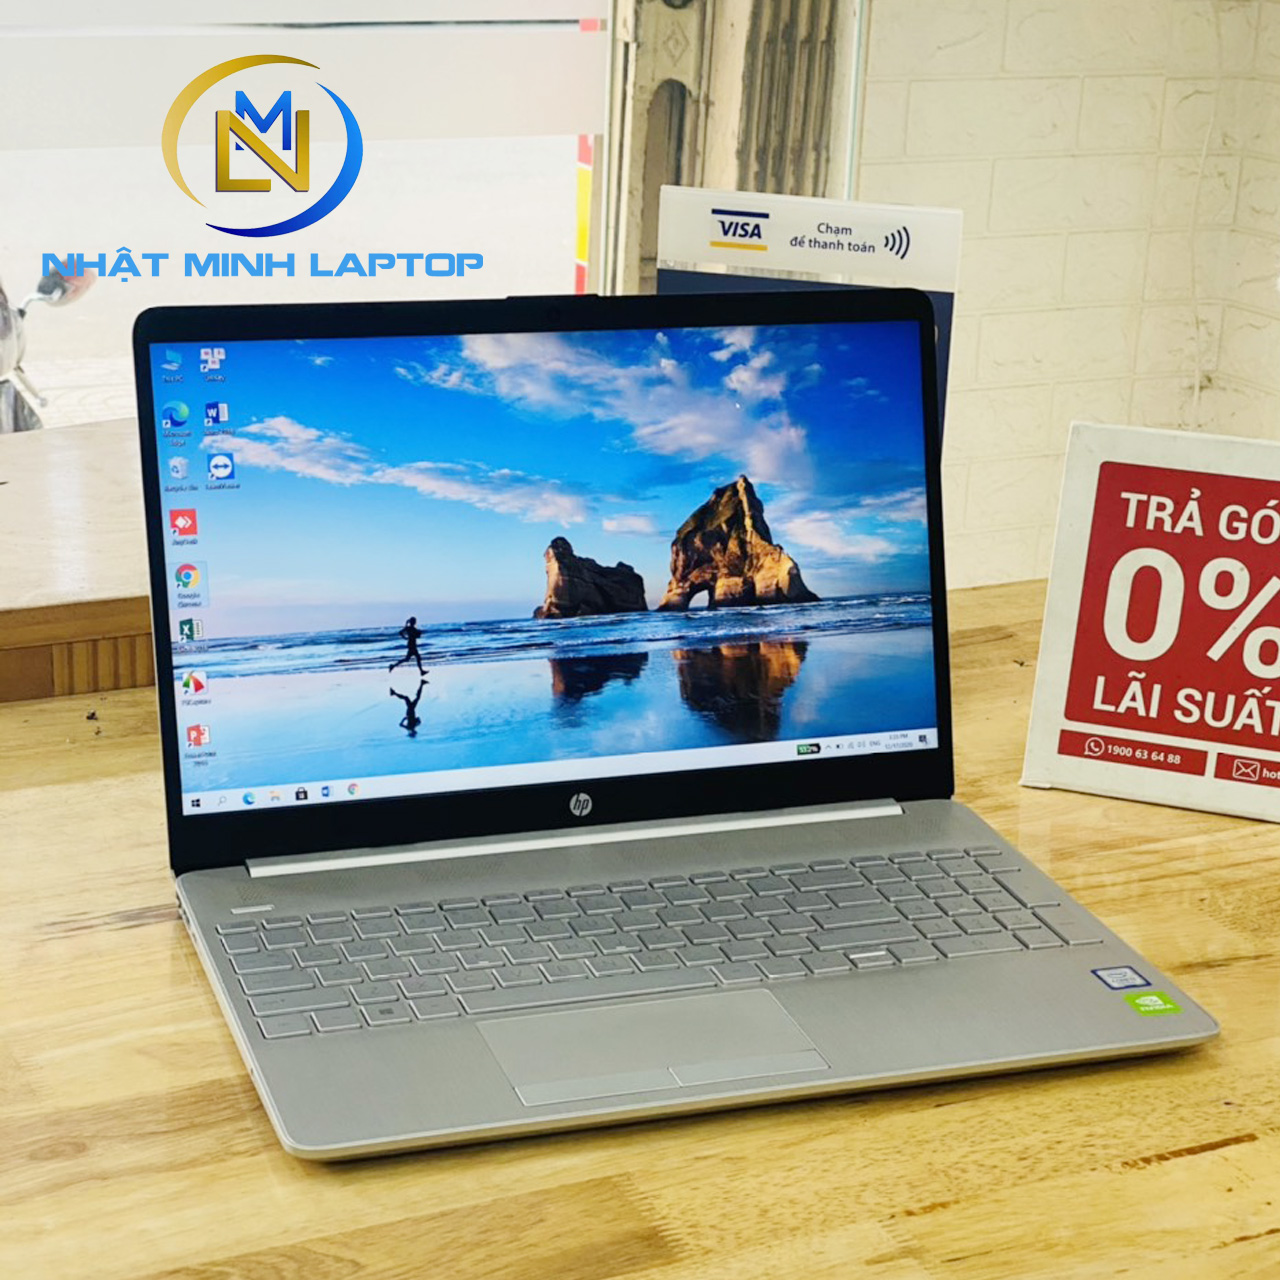 Laptop HP 15s-du0042TX i3-7020U Ram 4G SSD 128G Vga Nvidia MX110 15.6" Full HD(đời 2019)